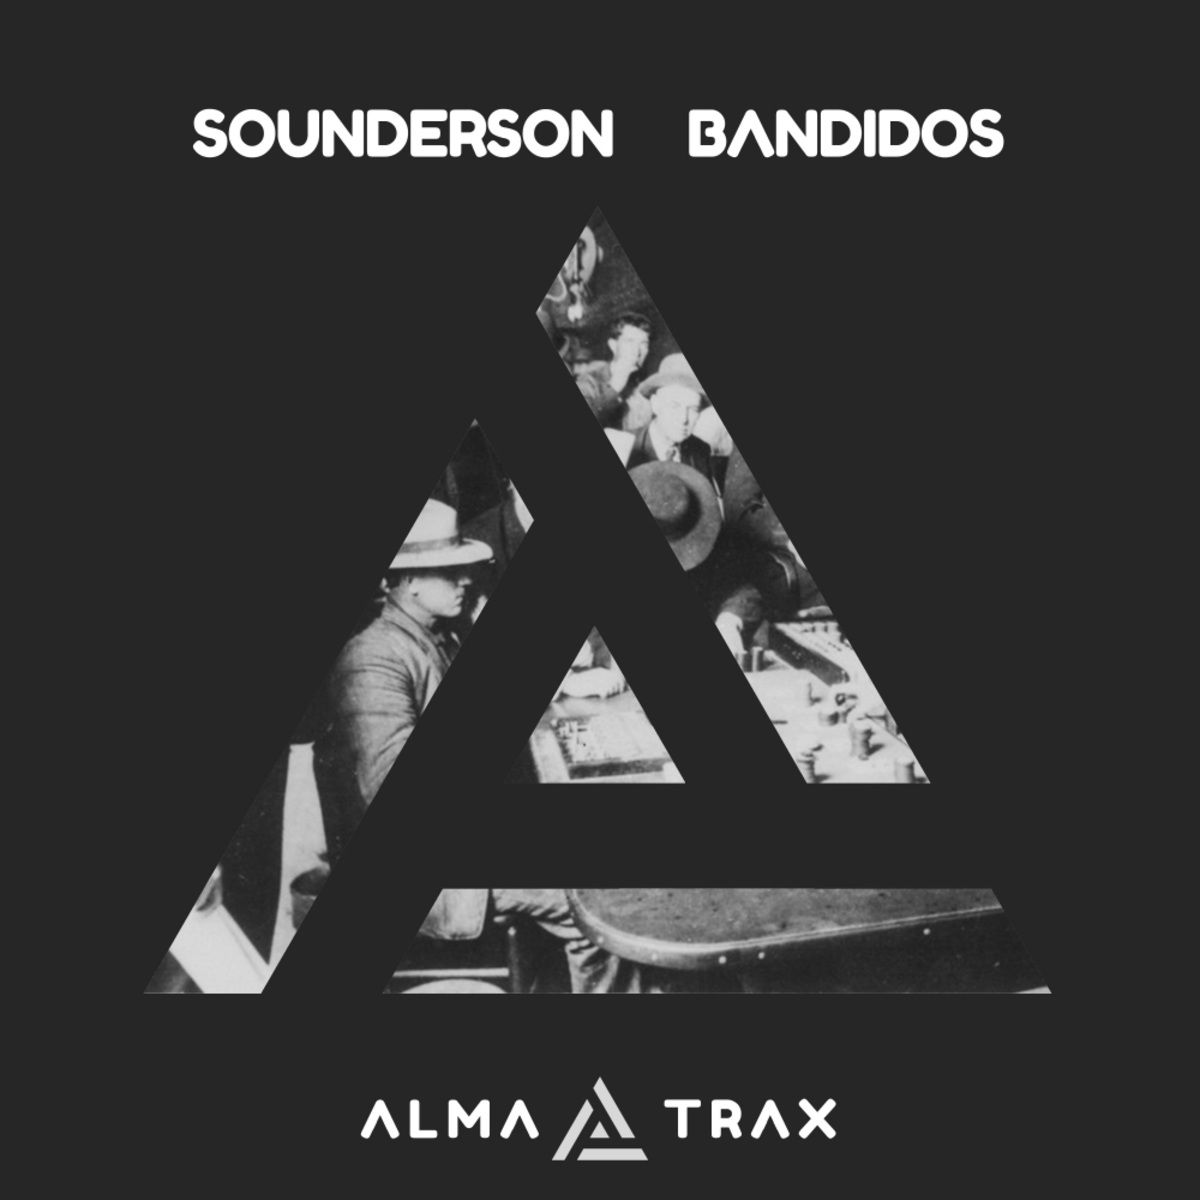 Sounderson - Bandidos / Alma Trax